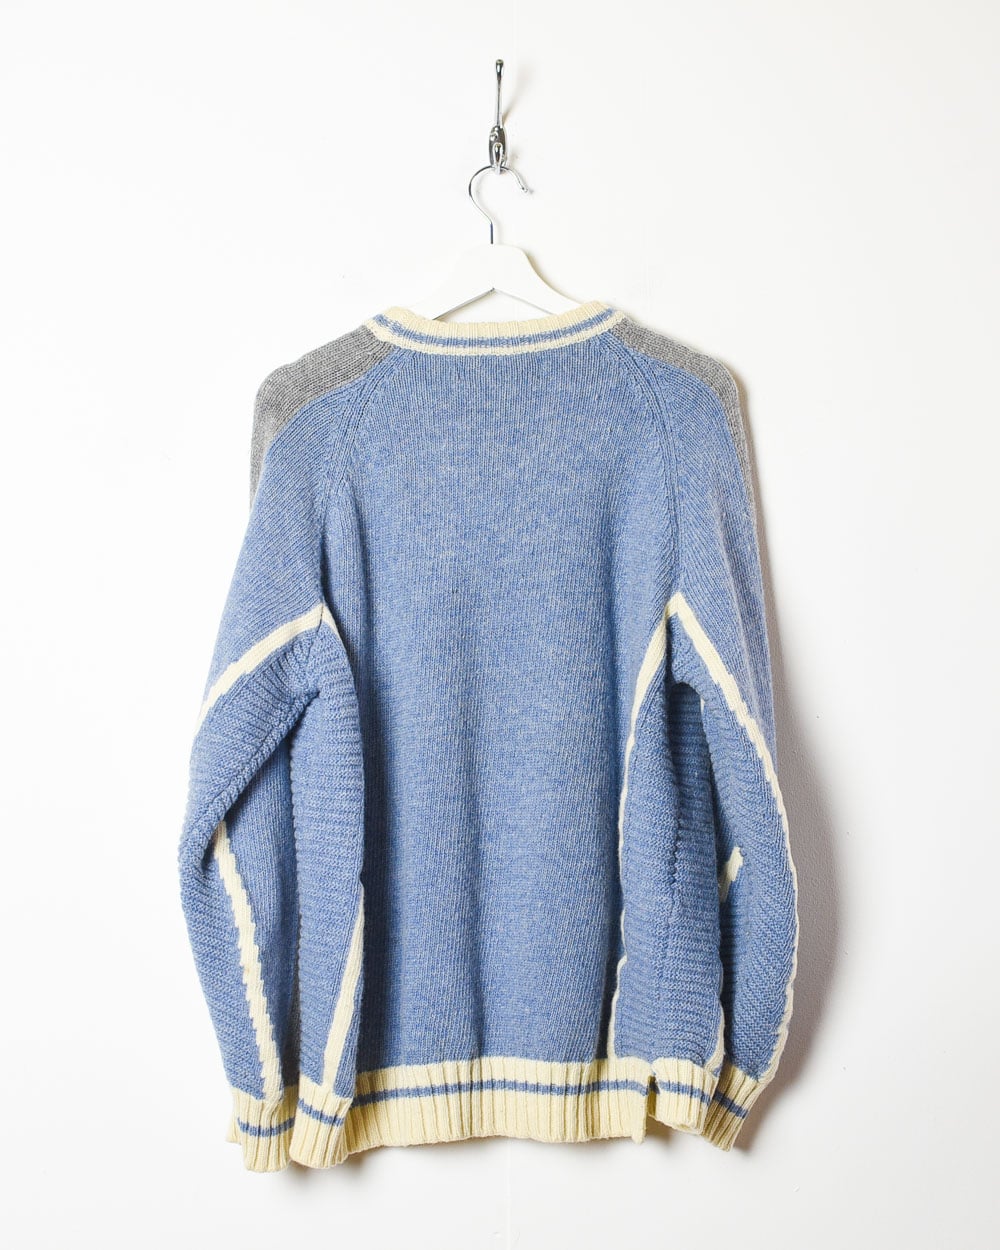 Baby Napapijri Knitted Sweatshirt - Large